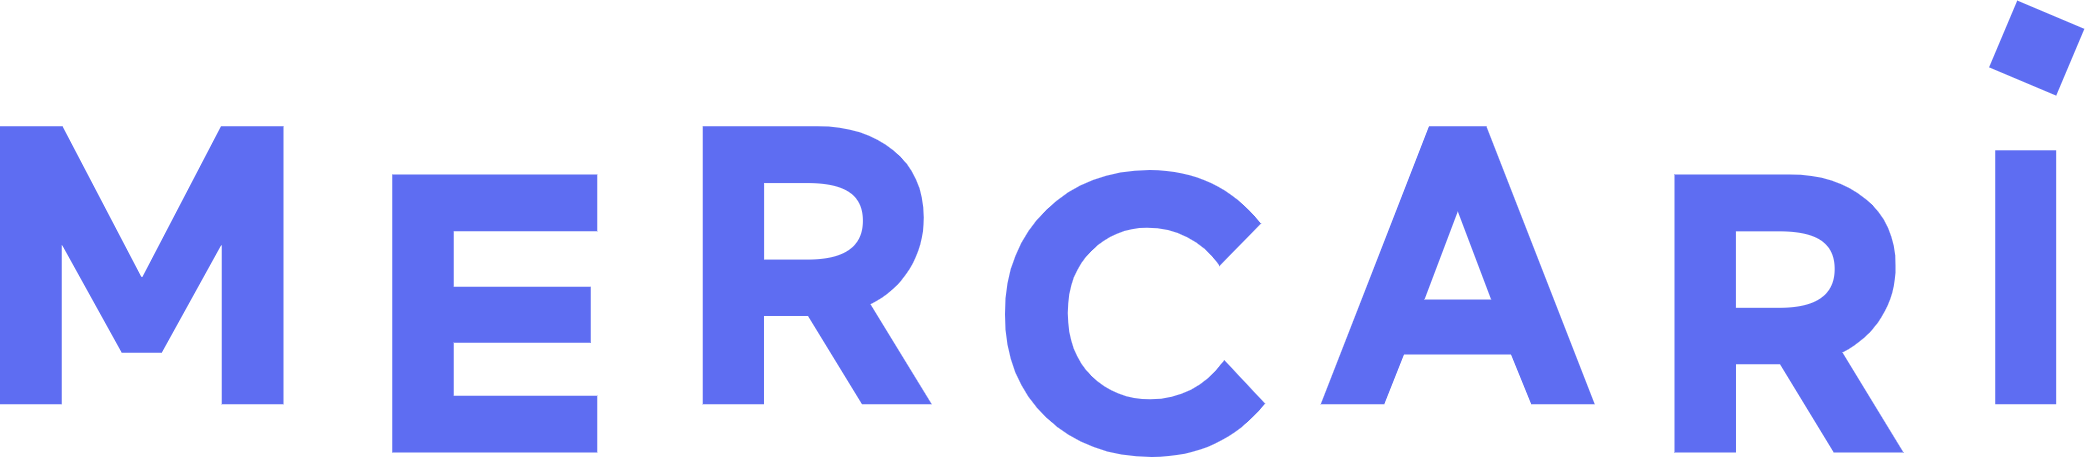 Mercari logo large (transparent PNG)